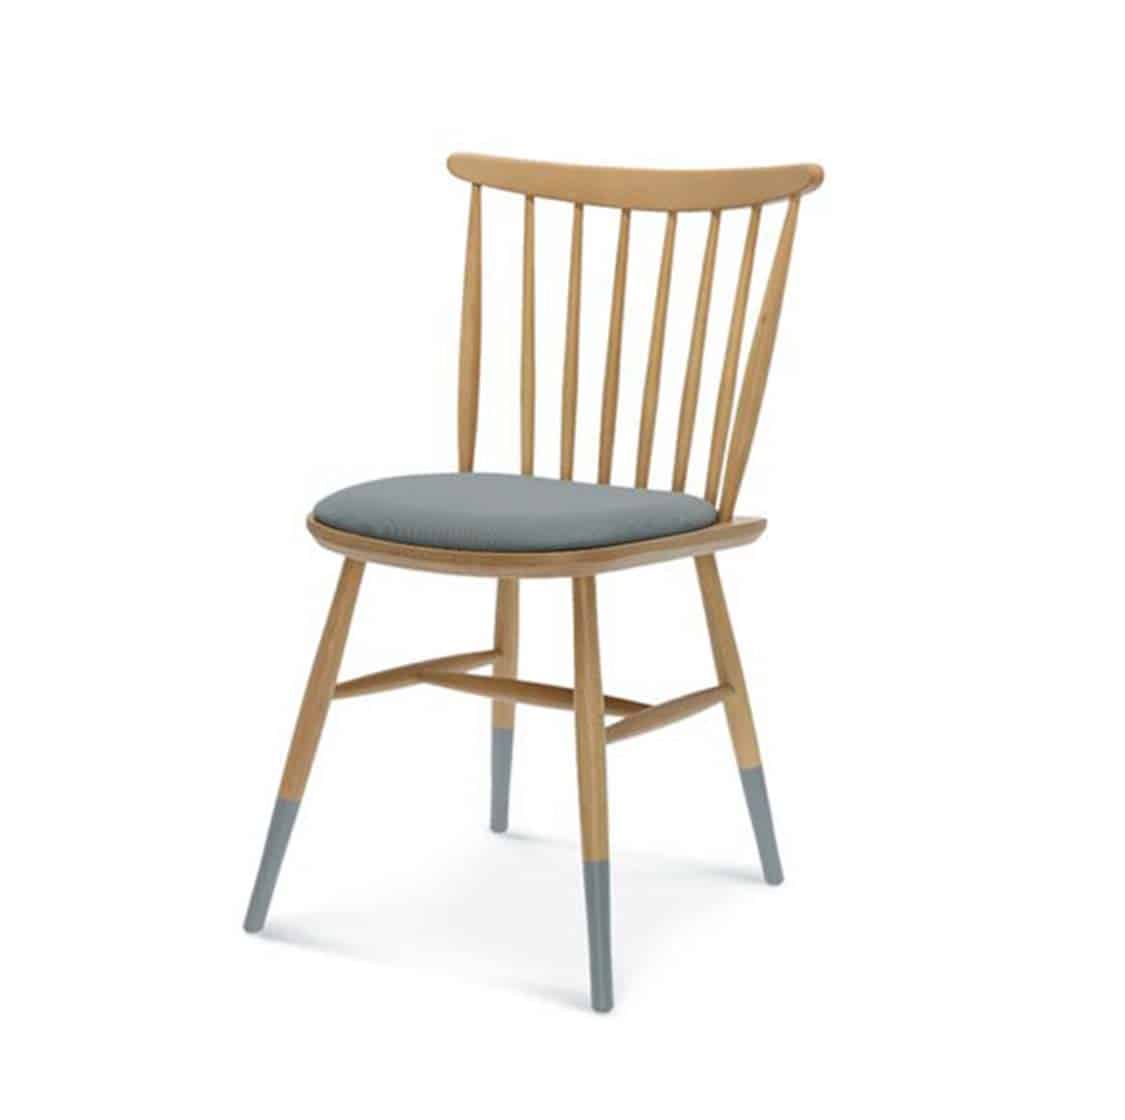 Wand chair